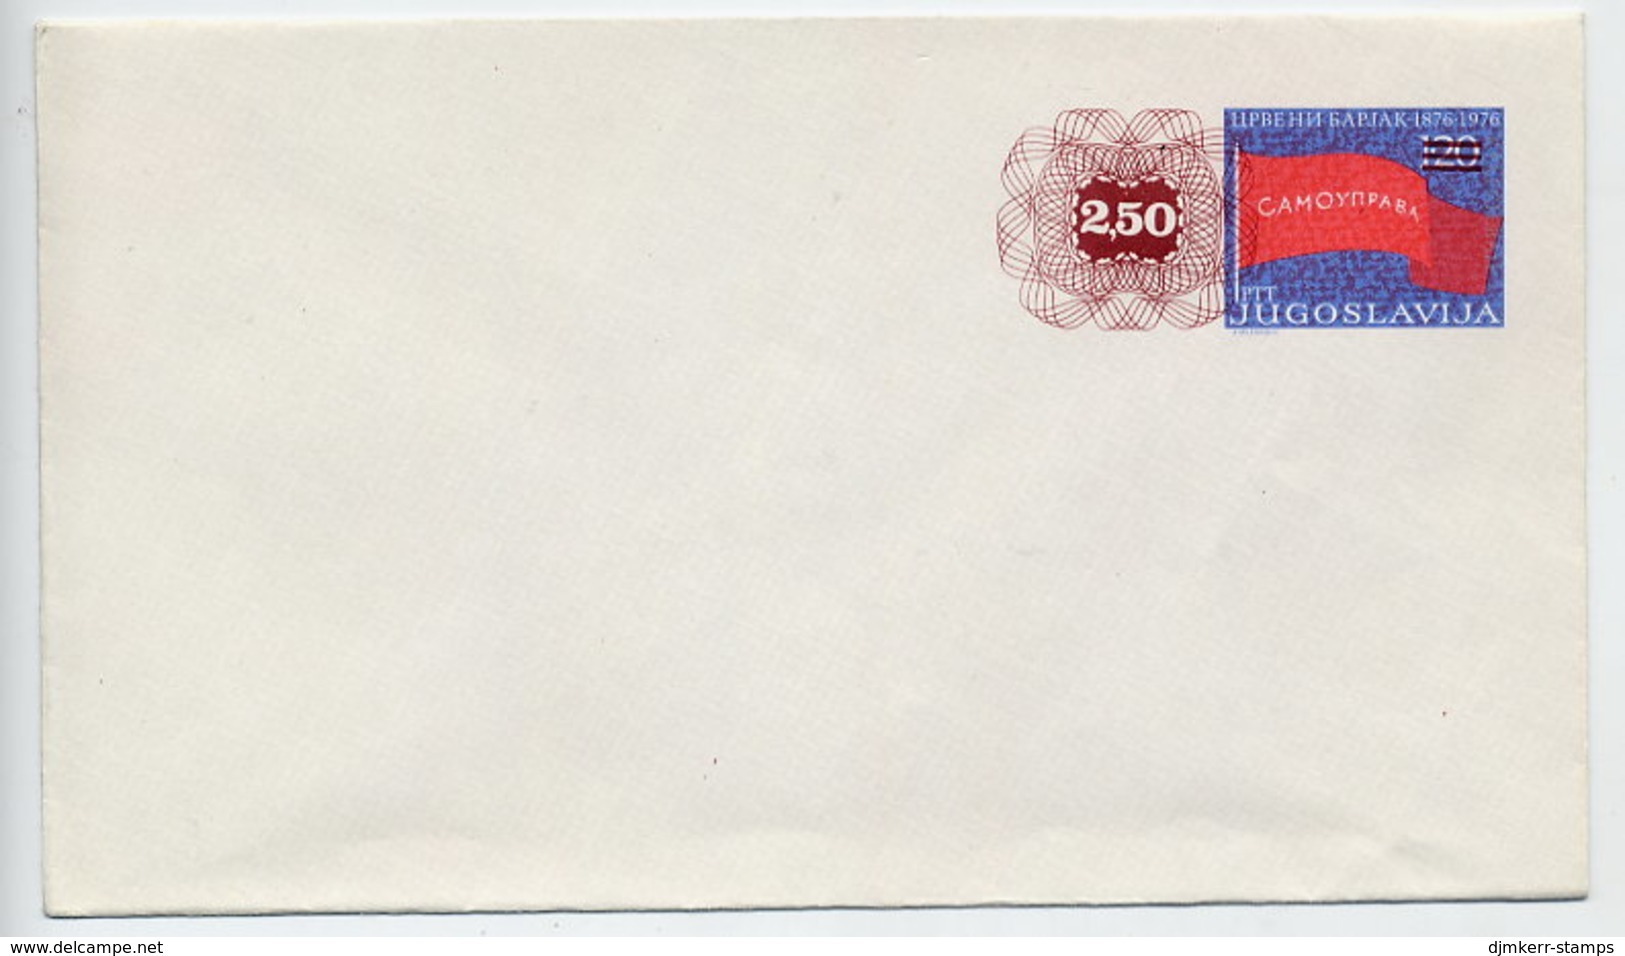 YUGOSLAVIA 1980 2.50 Surcharge On Red Flag Centenary Envelope Unused. Michel U87 II - Interi Postali